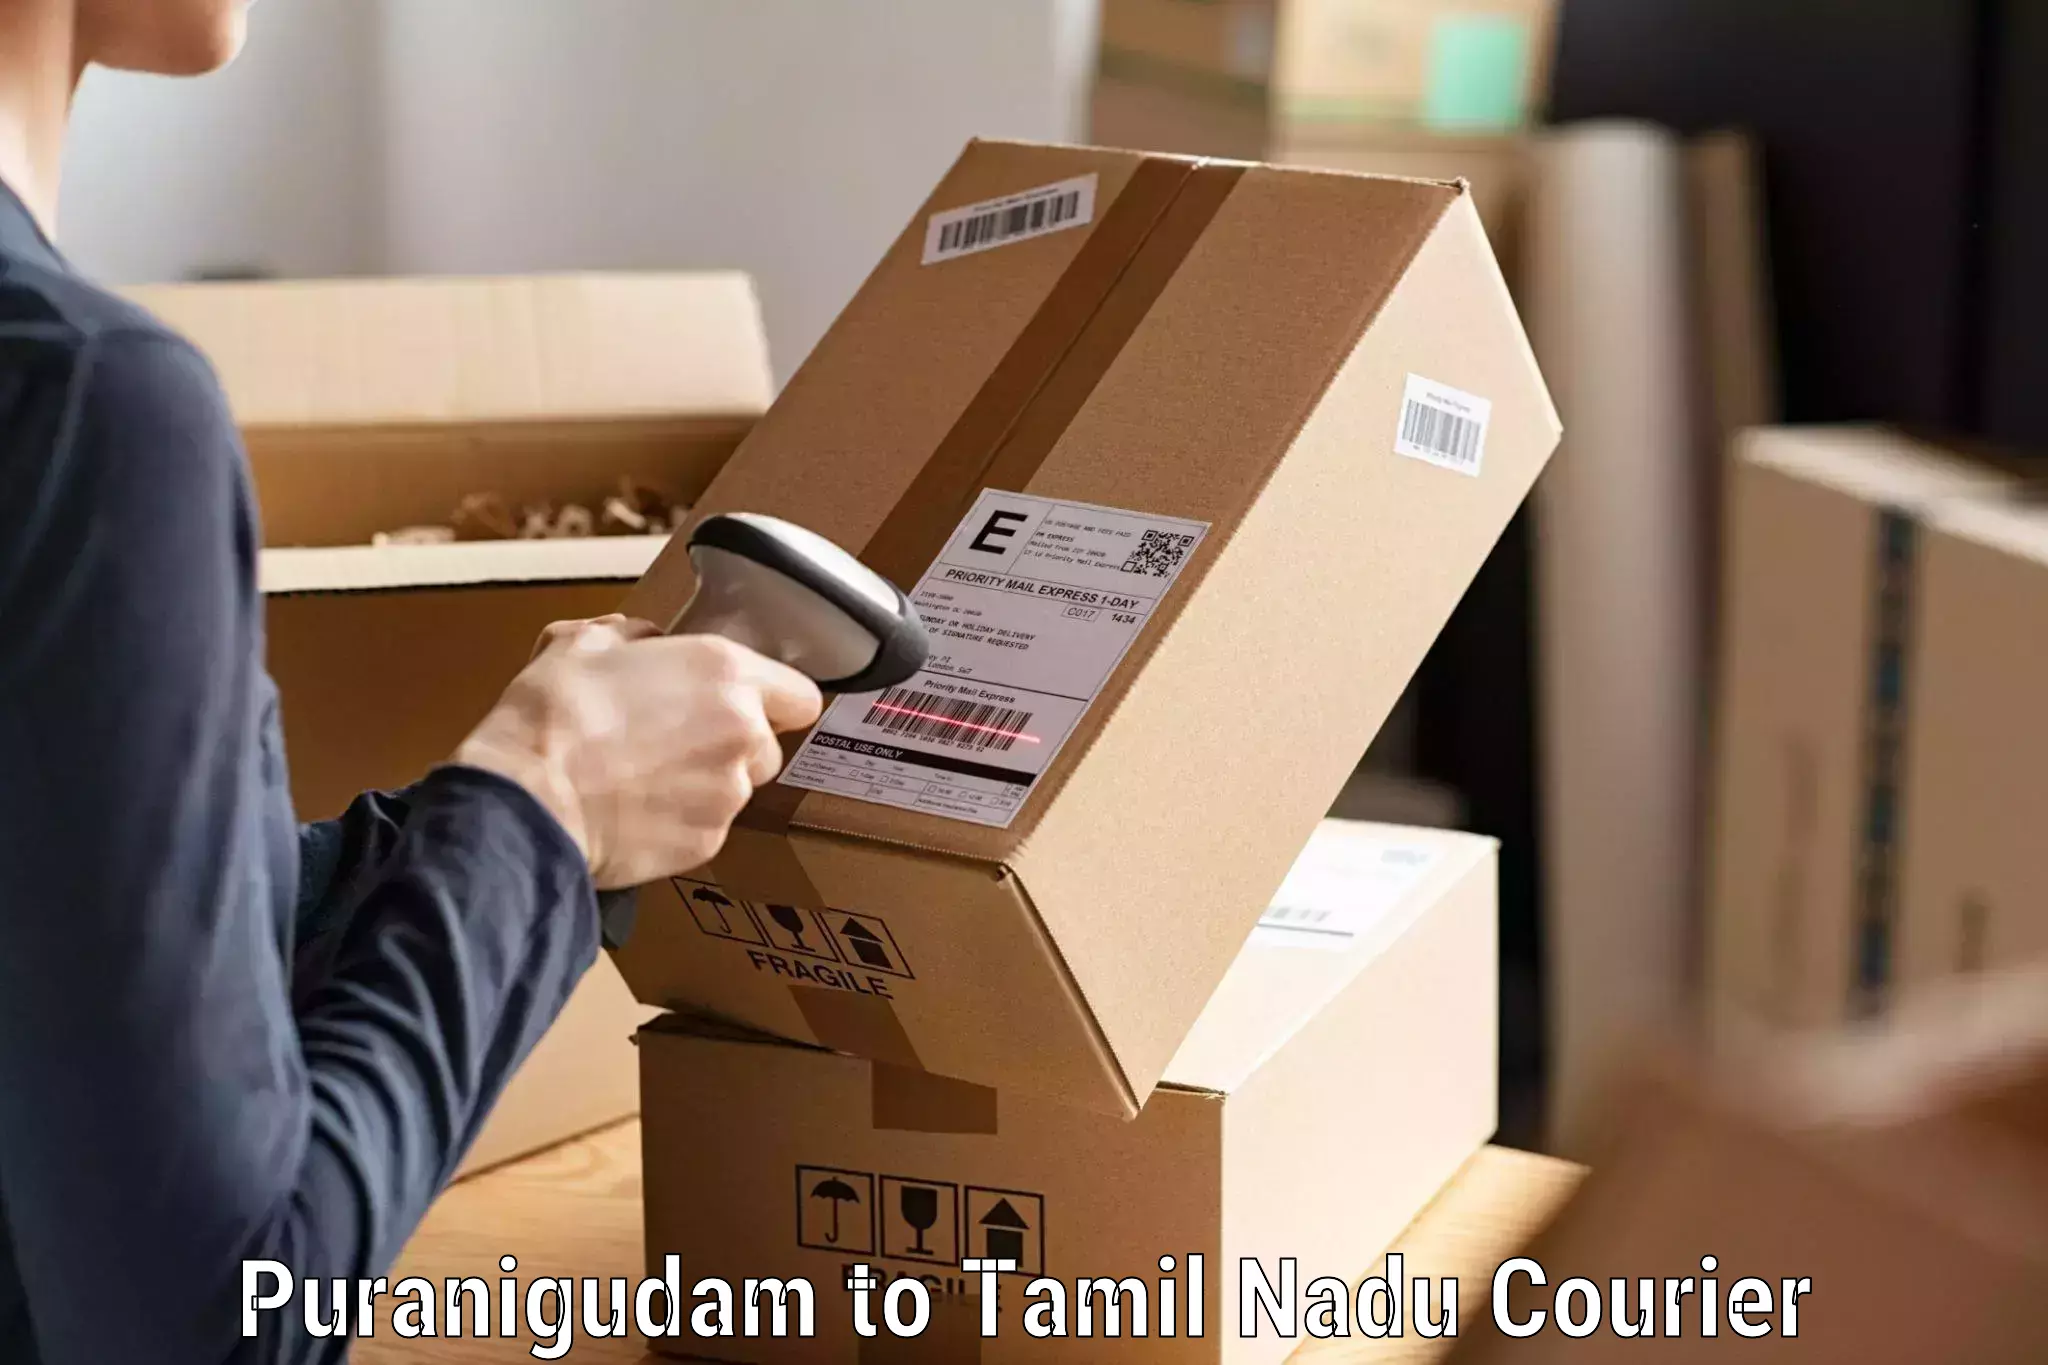 Doorstep delivery service Puranigudam to Tamil Nadu